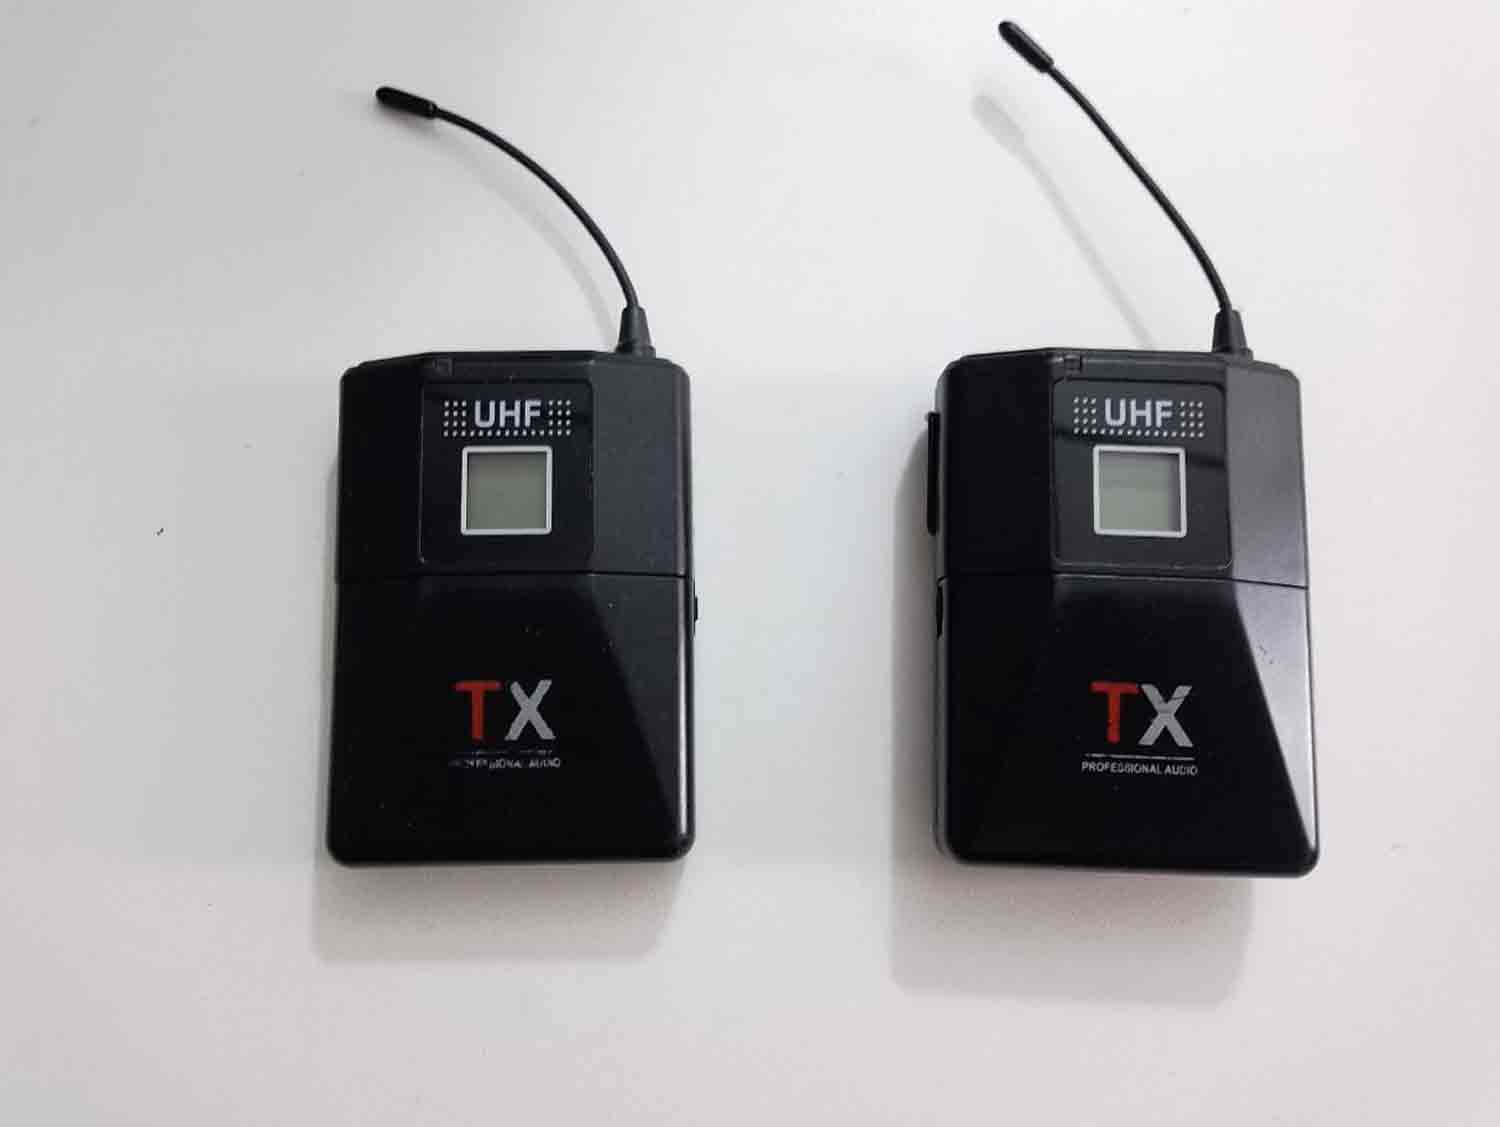 TX Wireless Microphone Bodypack Transmitter